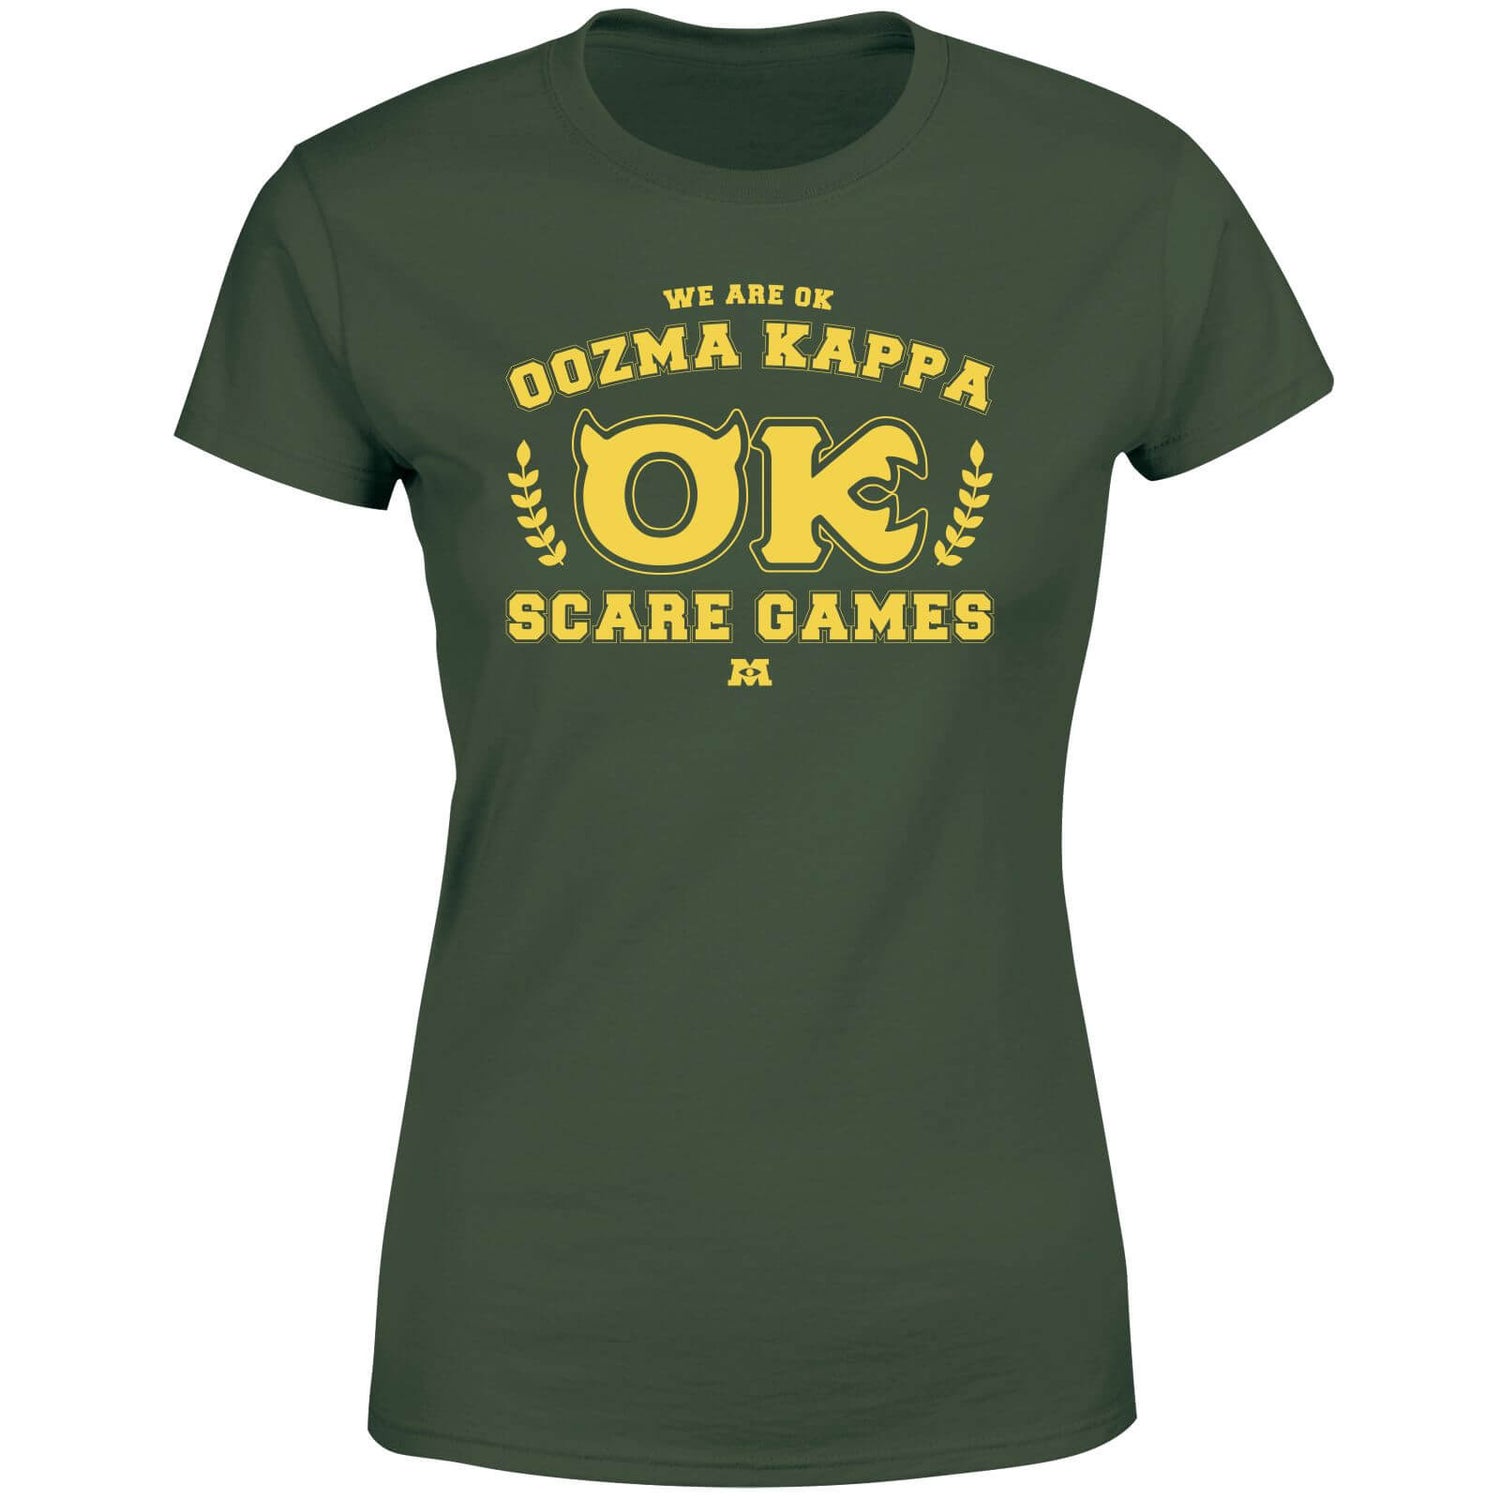 Monsters Inc. Oozma Kappa Scare Games Women's T-Shirt - Green